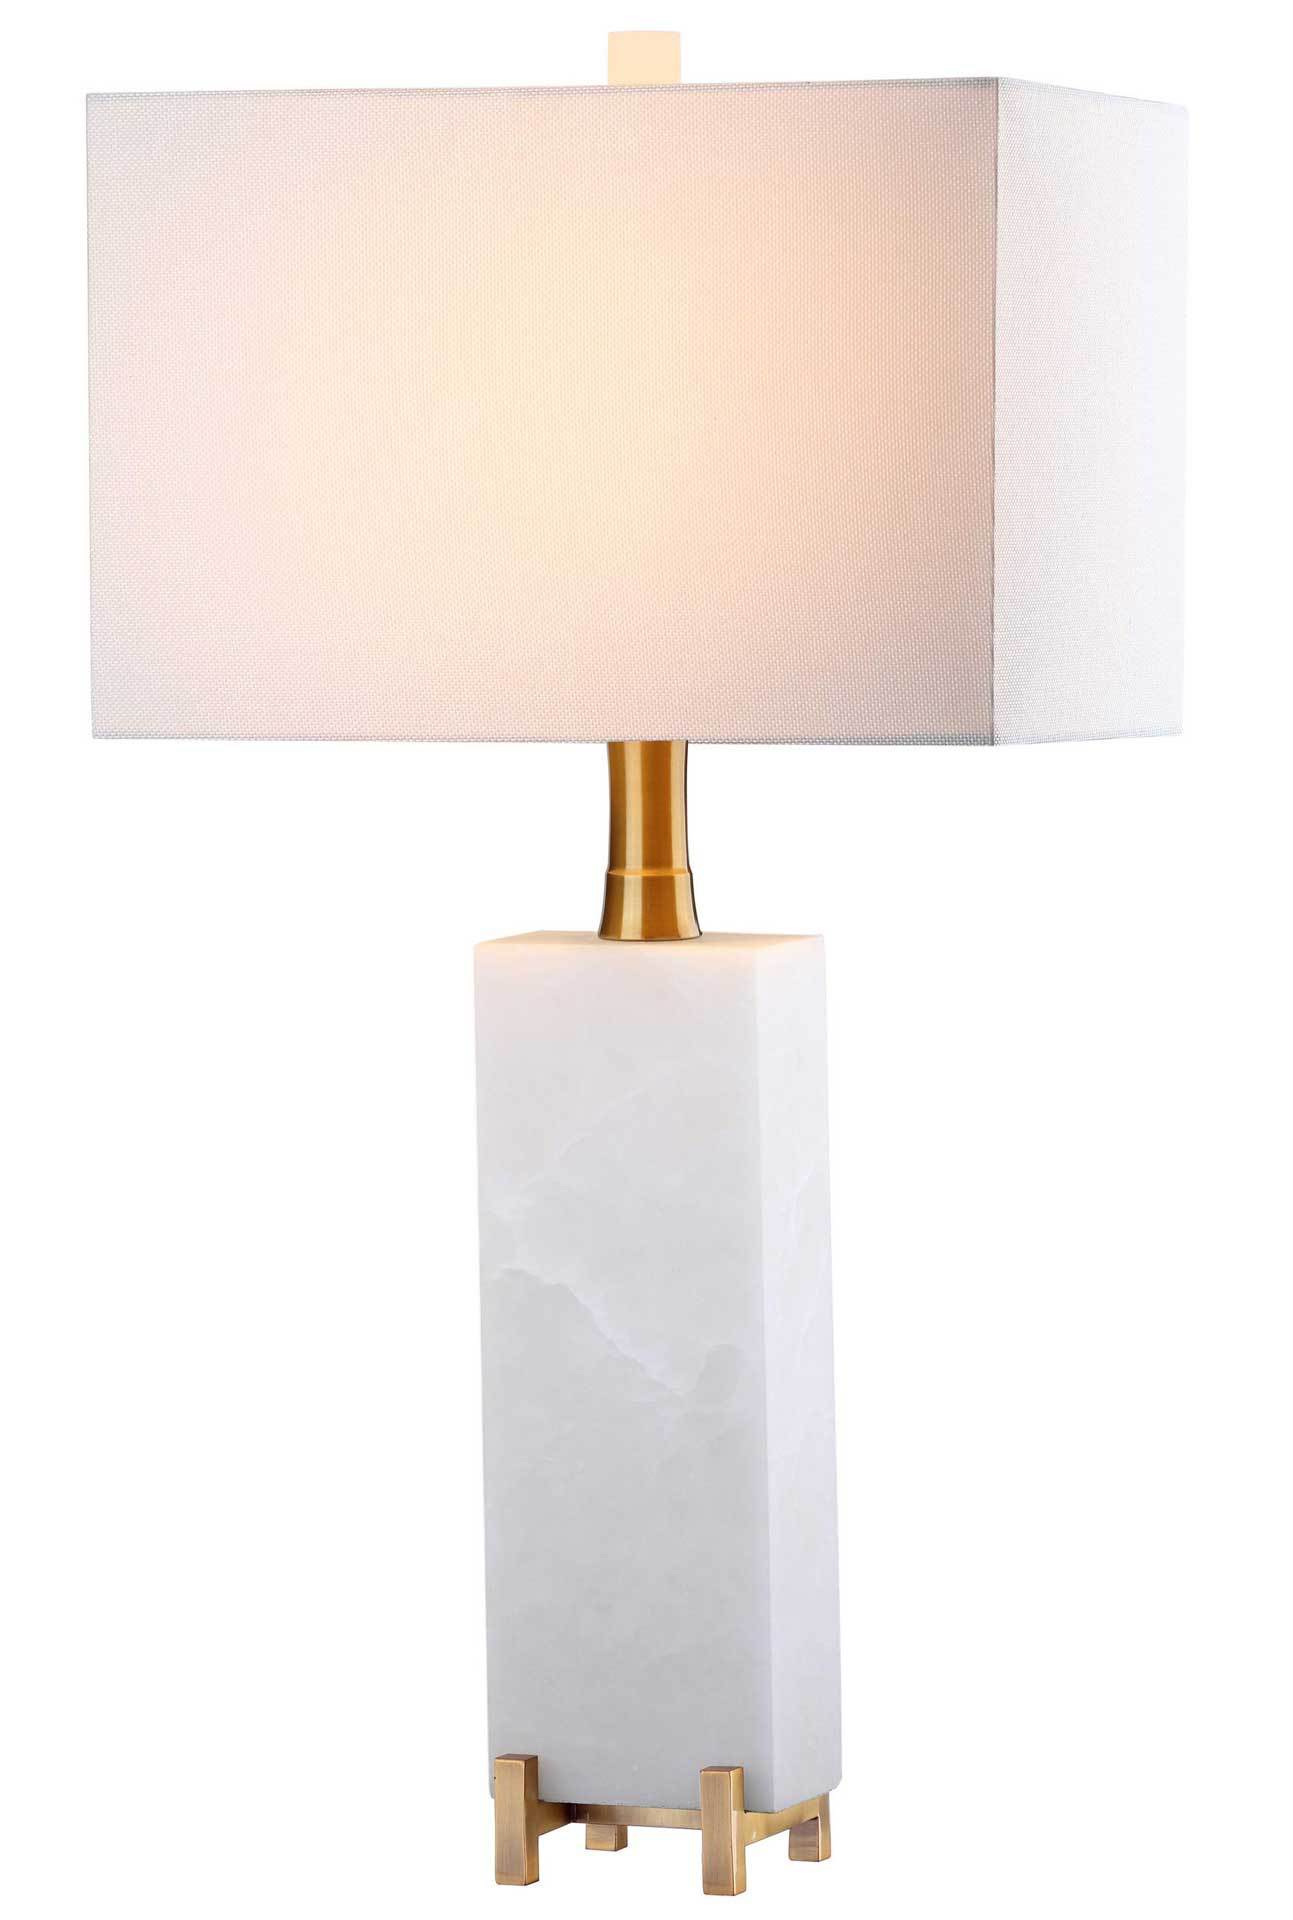 Slade Alabaster Table Lamp White/Brass Gold